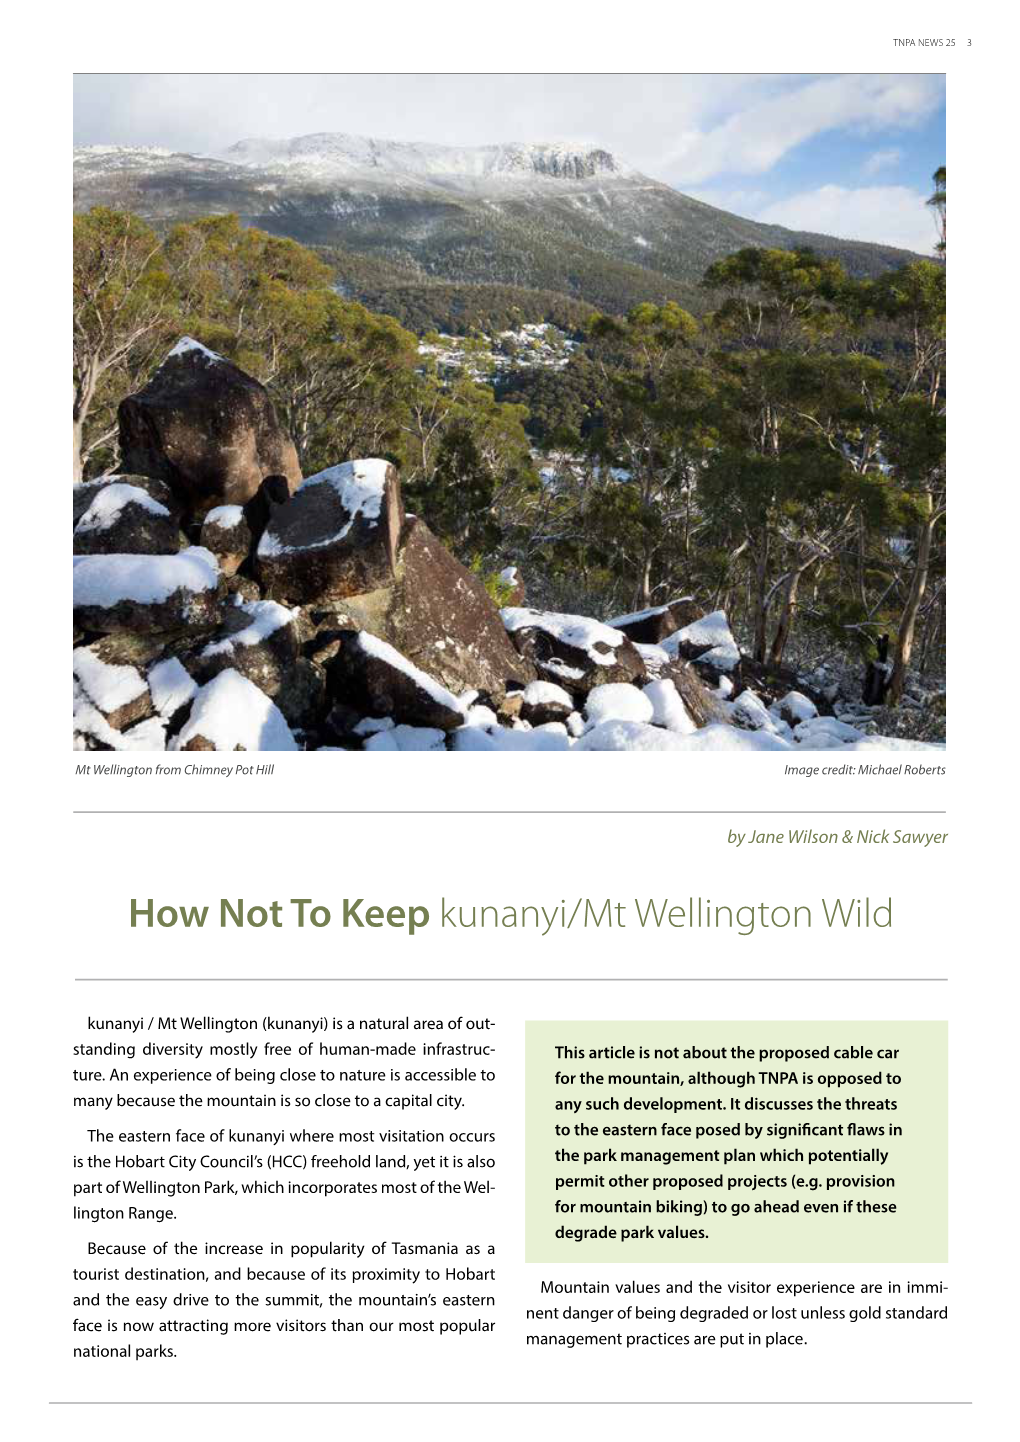 How Not to Keep Kunanyi/Mt Wellington Wild